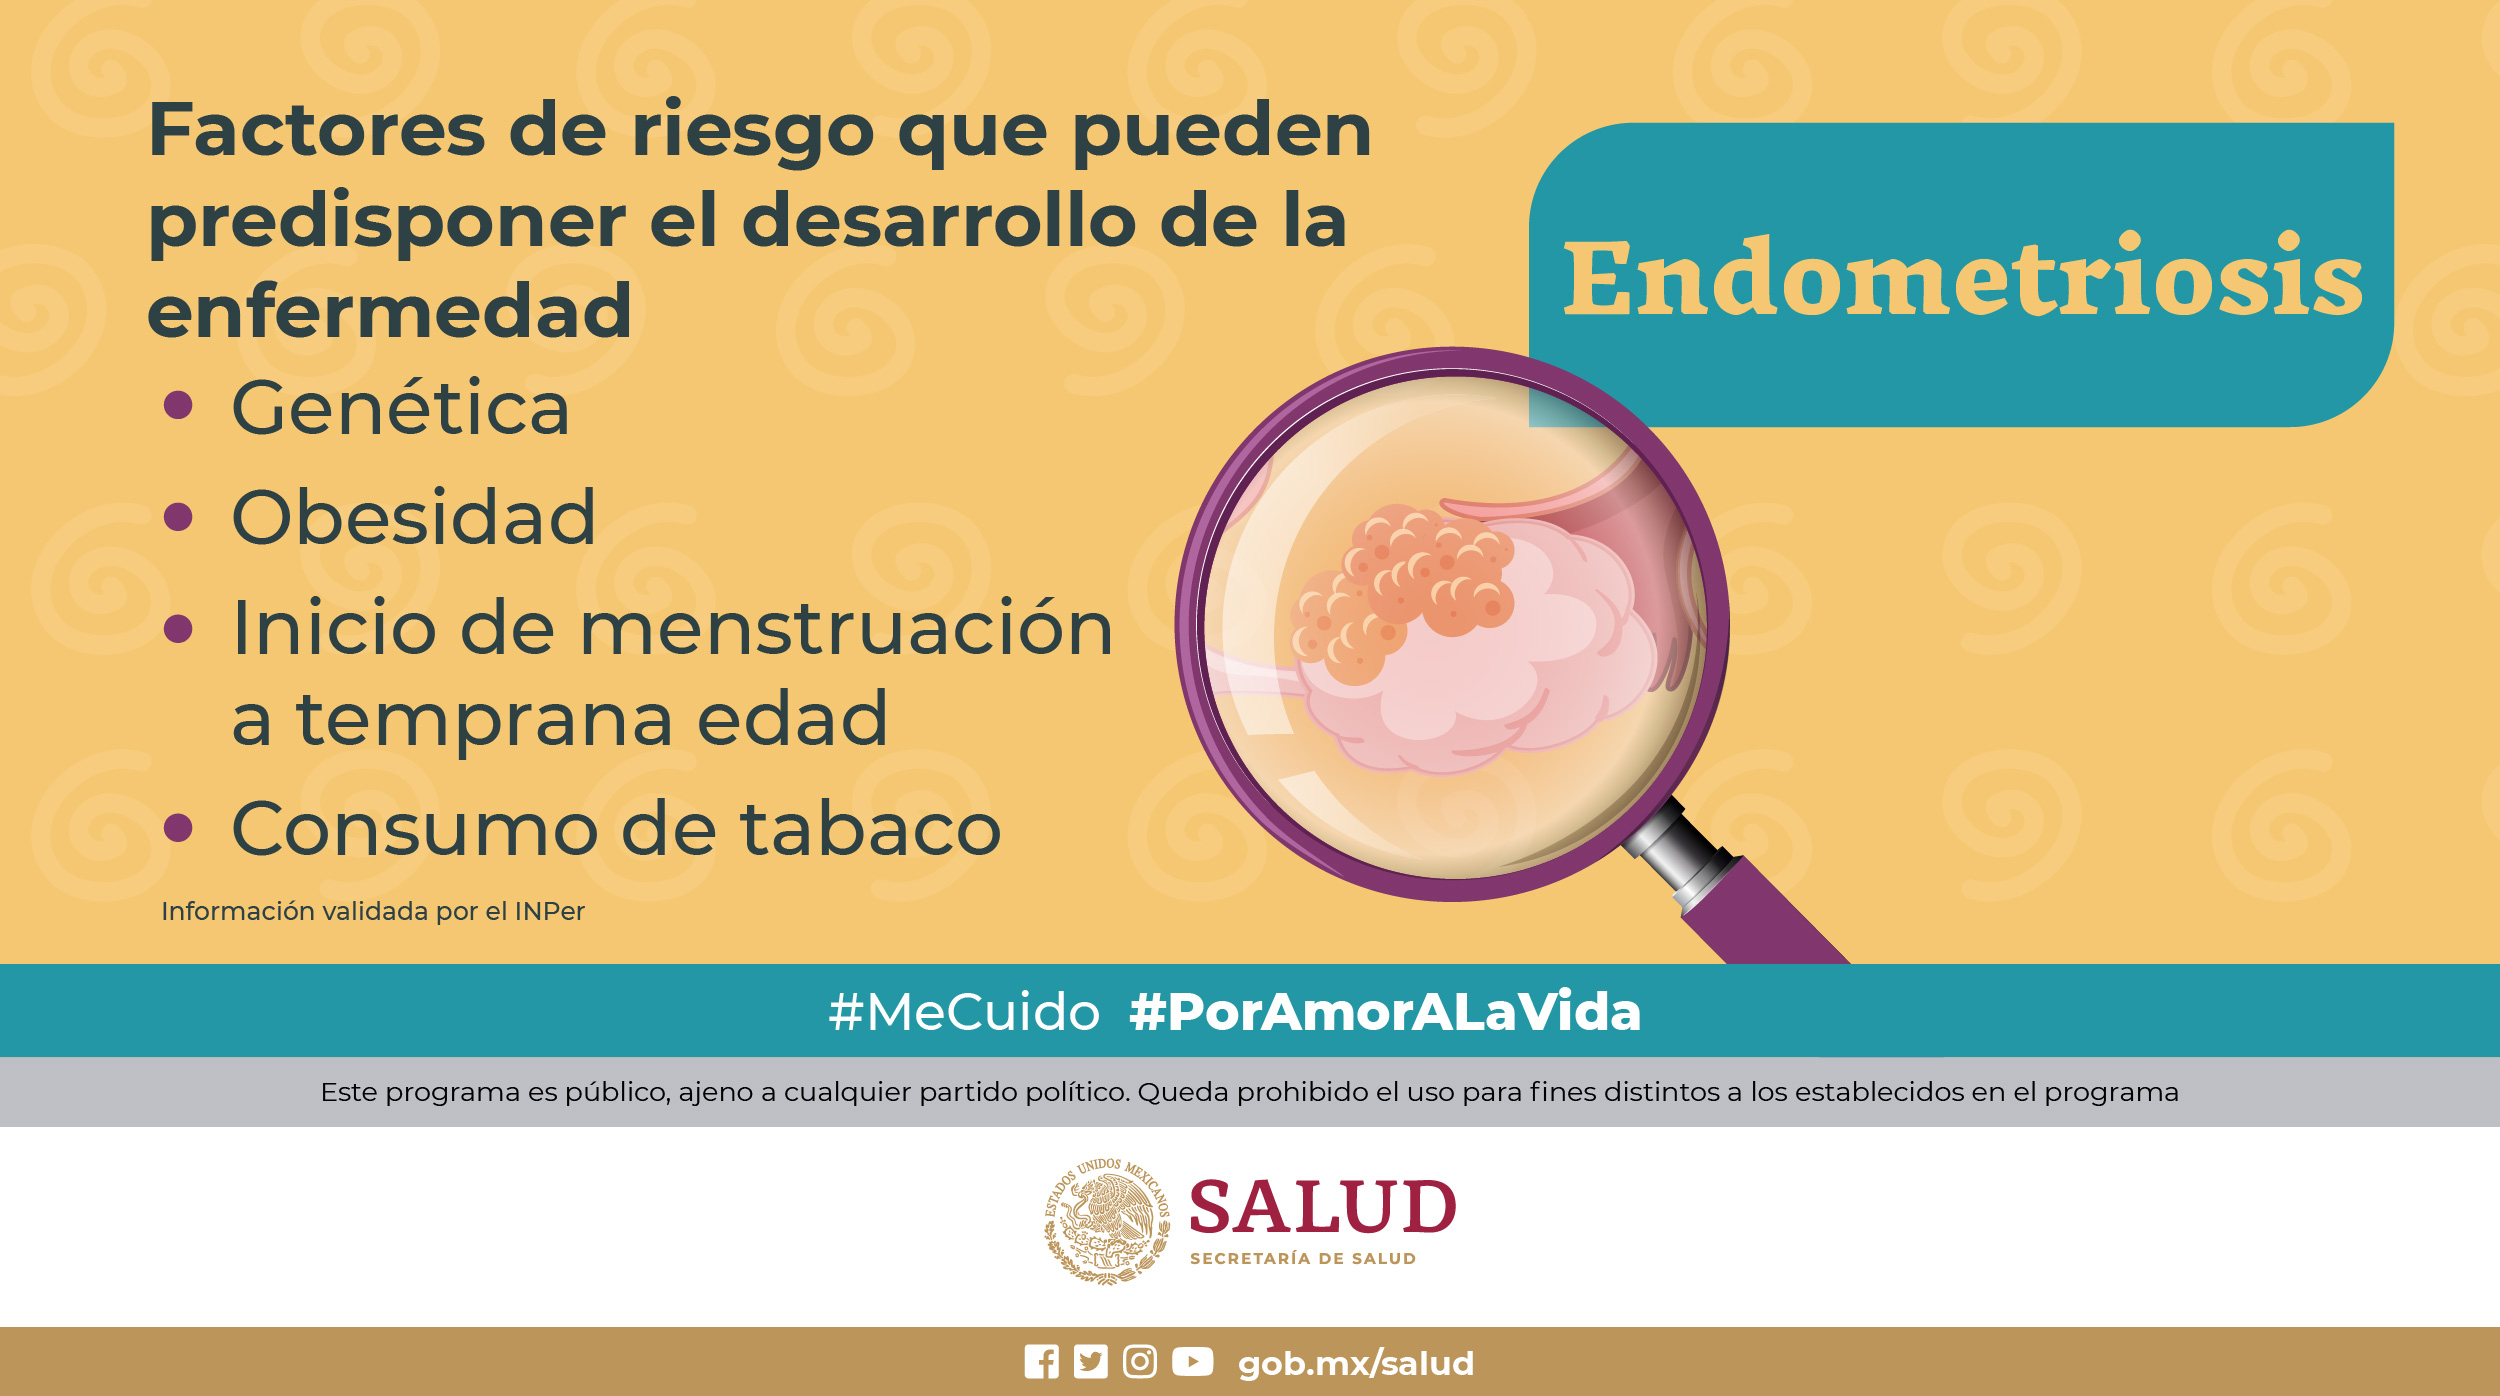 /cms/uploads/image/file/807144/14_MARZO_Di_a_Mundial_de_la_Endometriosis-10.jpg